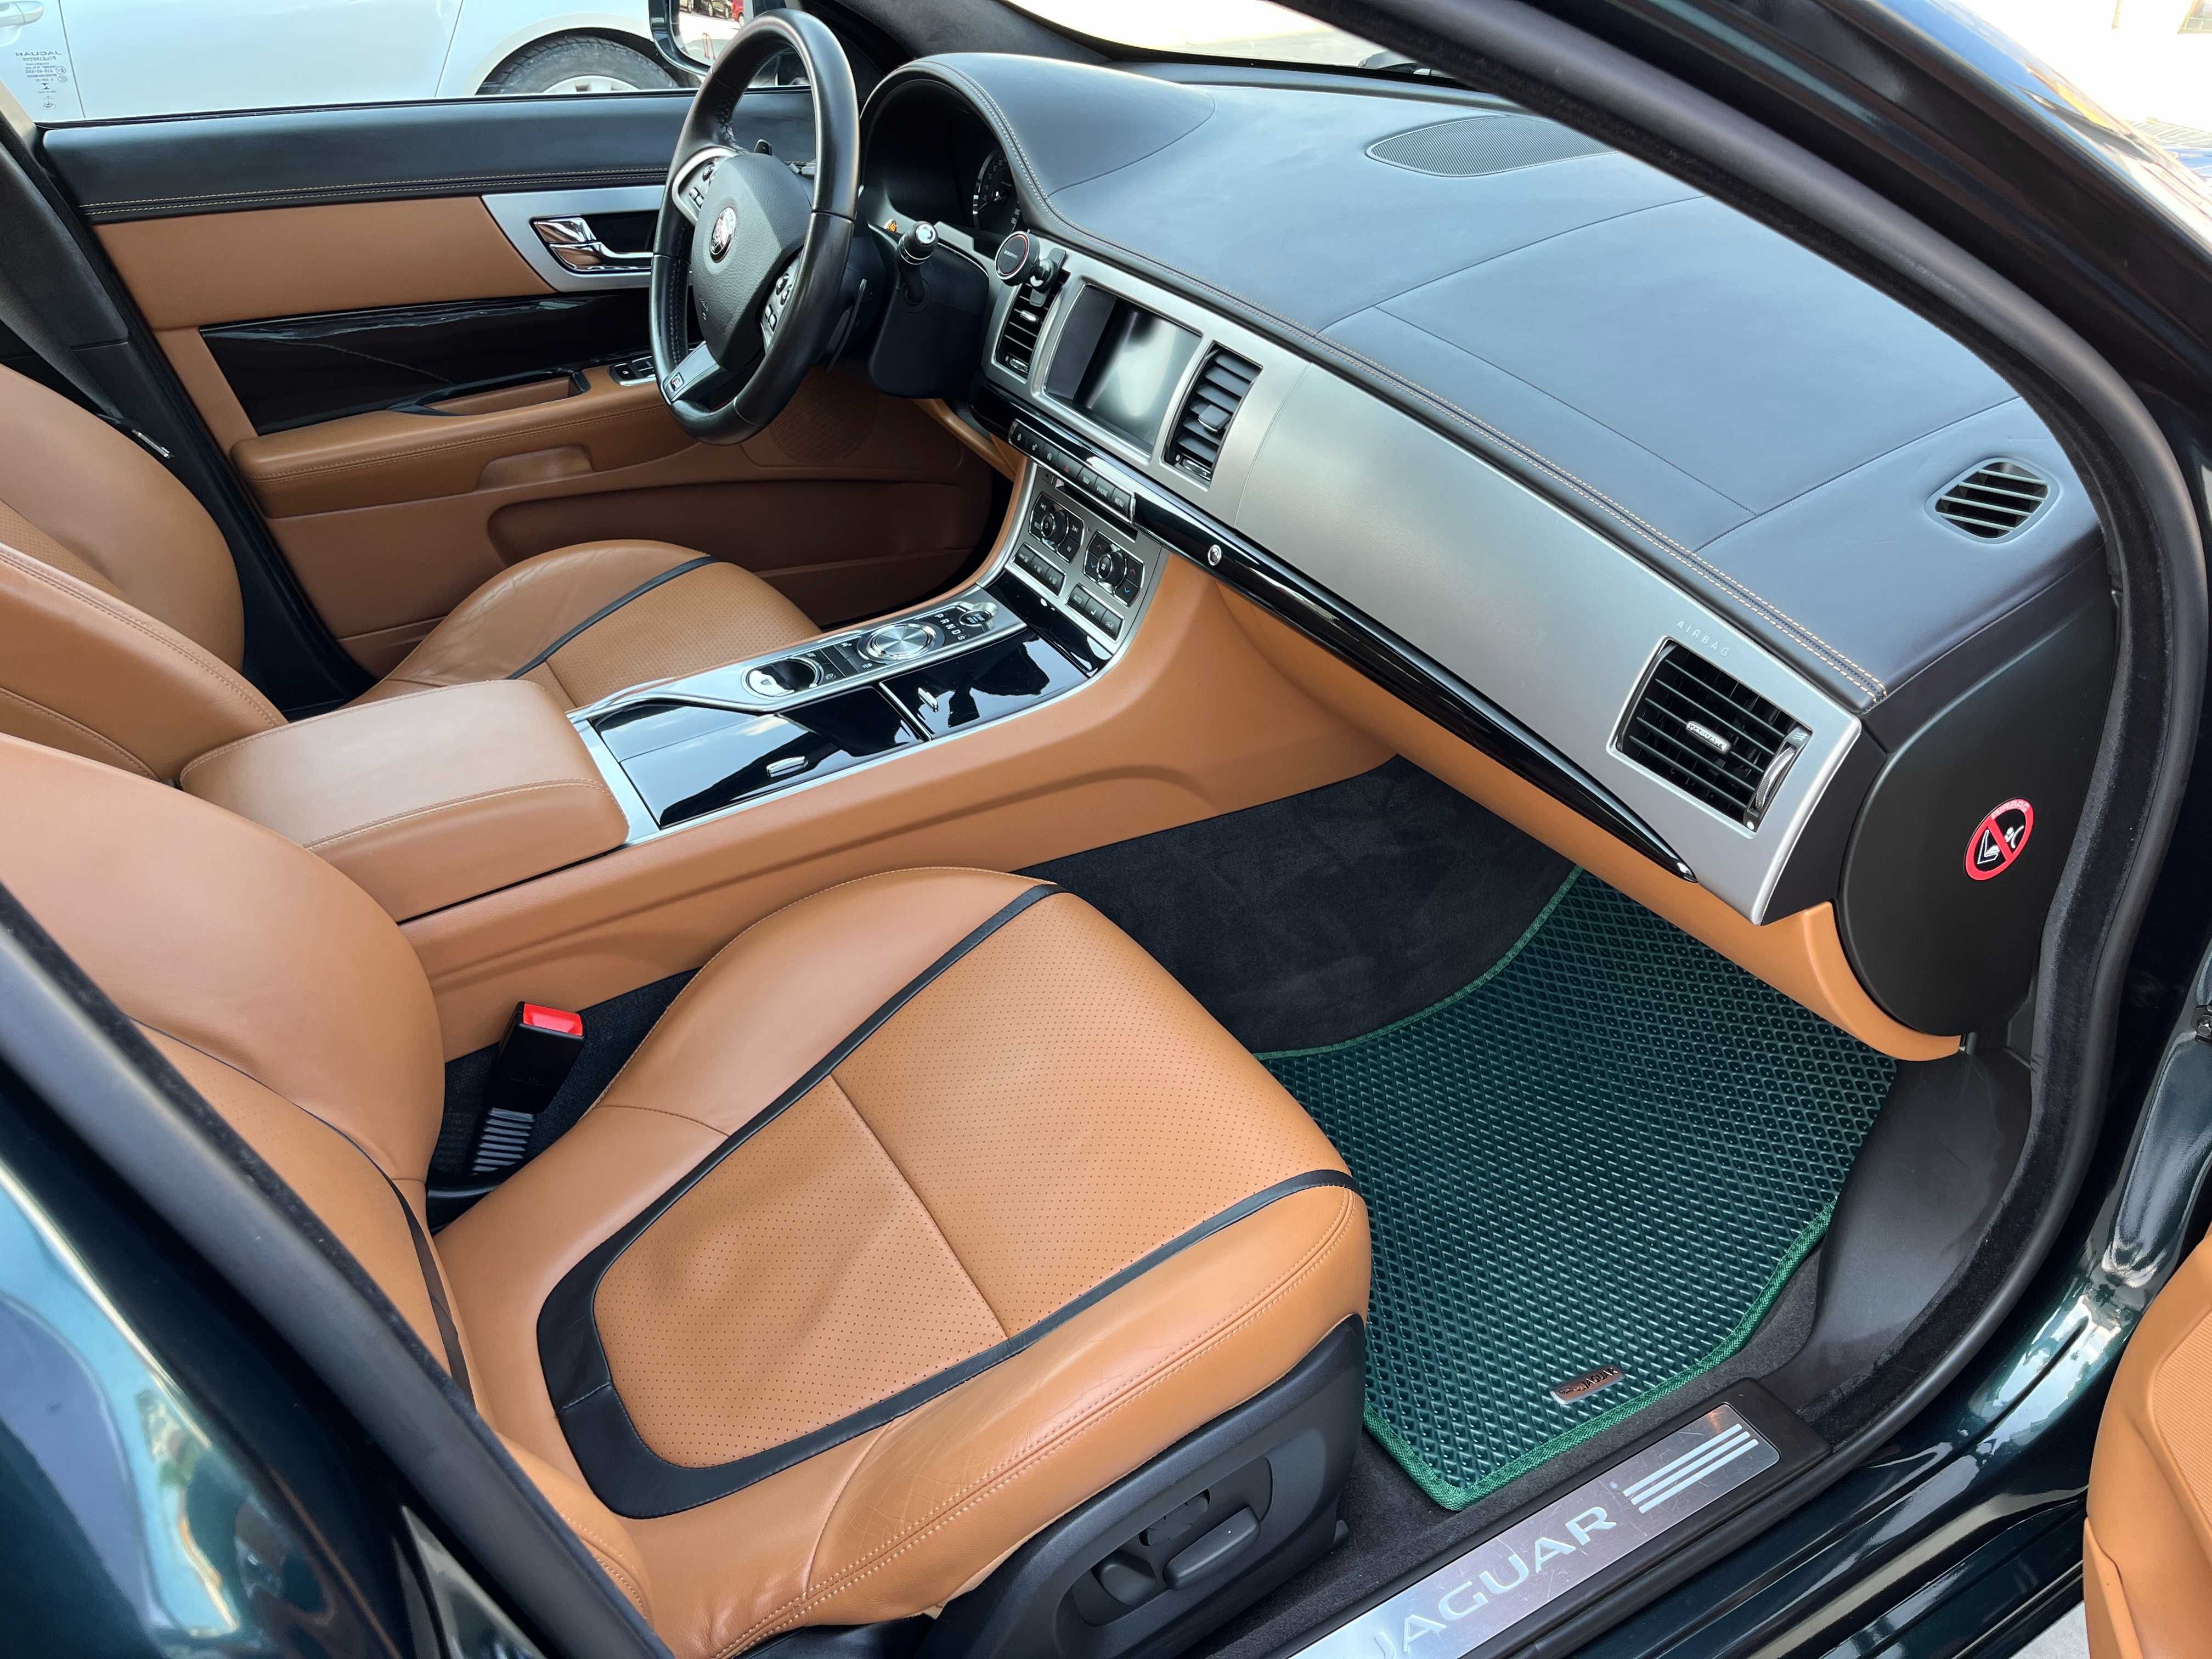 Jaguar XF S Portfolio 2015 V6 600Nm 275 3.D | intretinut la JLR Dealer